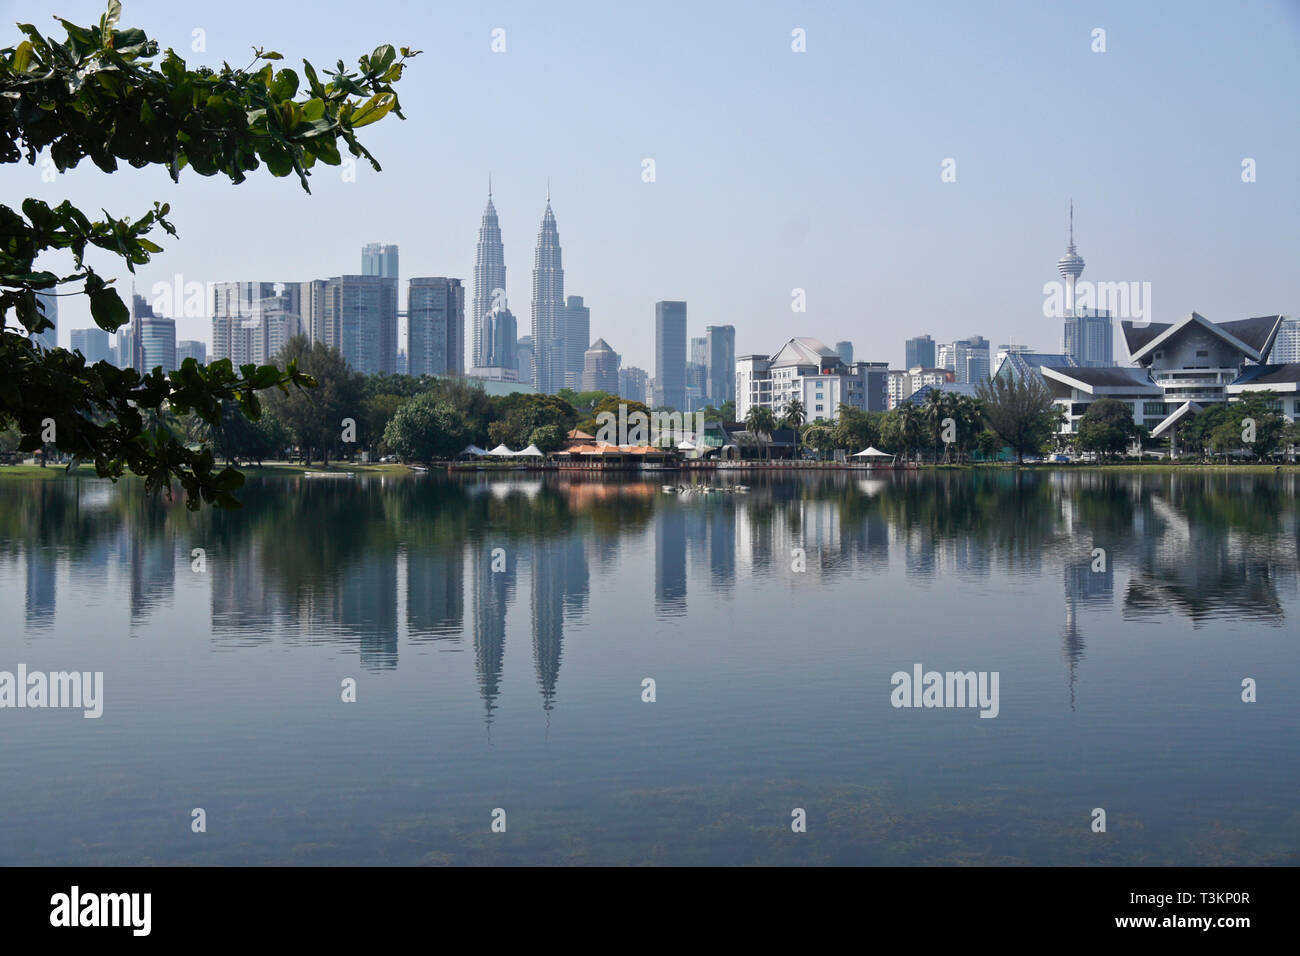 Les Tours Petronas, la Tour KL, et Istana Budaya (opéra) vue de Titiwangsa Lake Gardens, Kuala Lumpur, Malaisie Banque D'Images